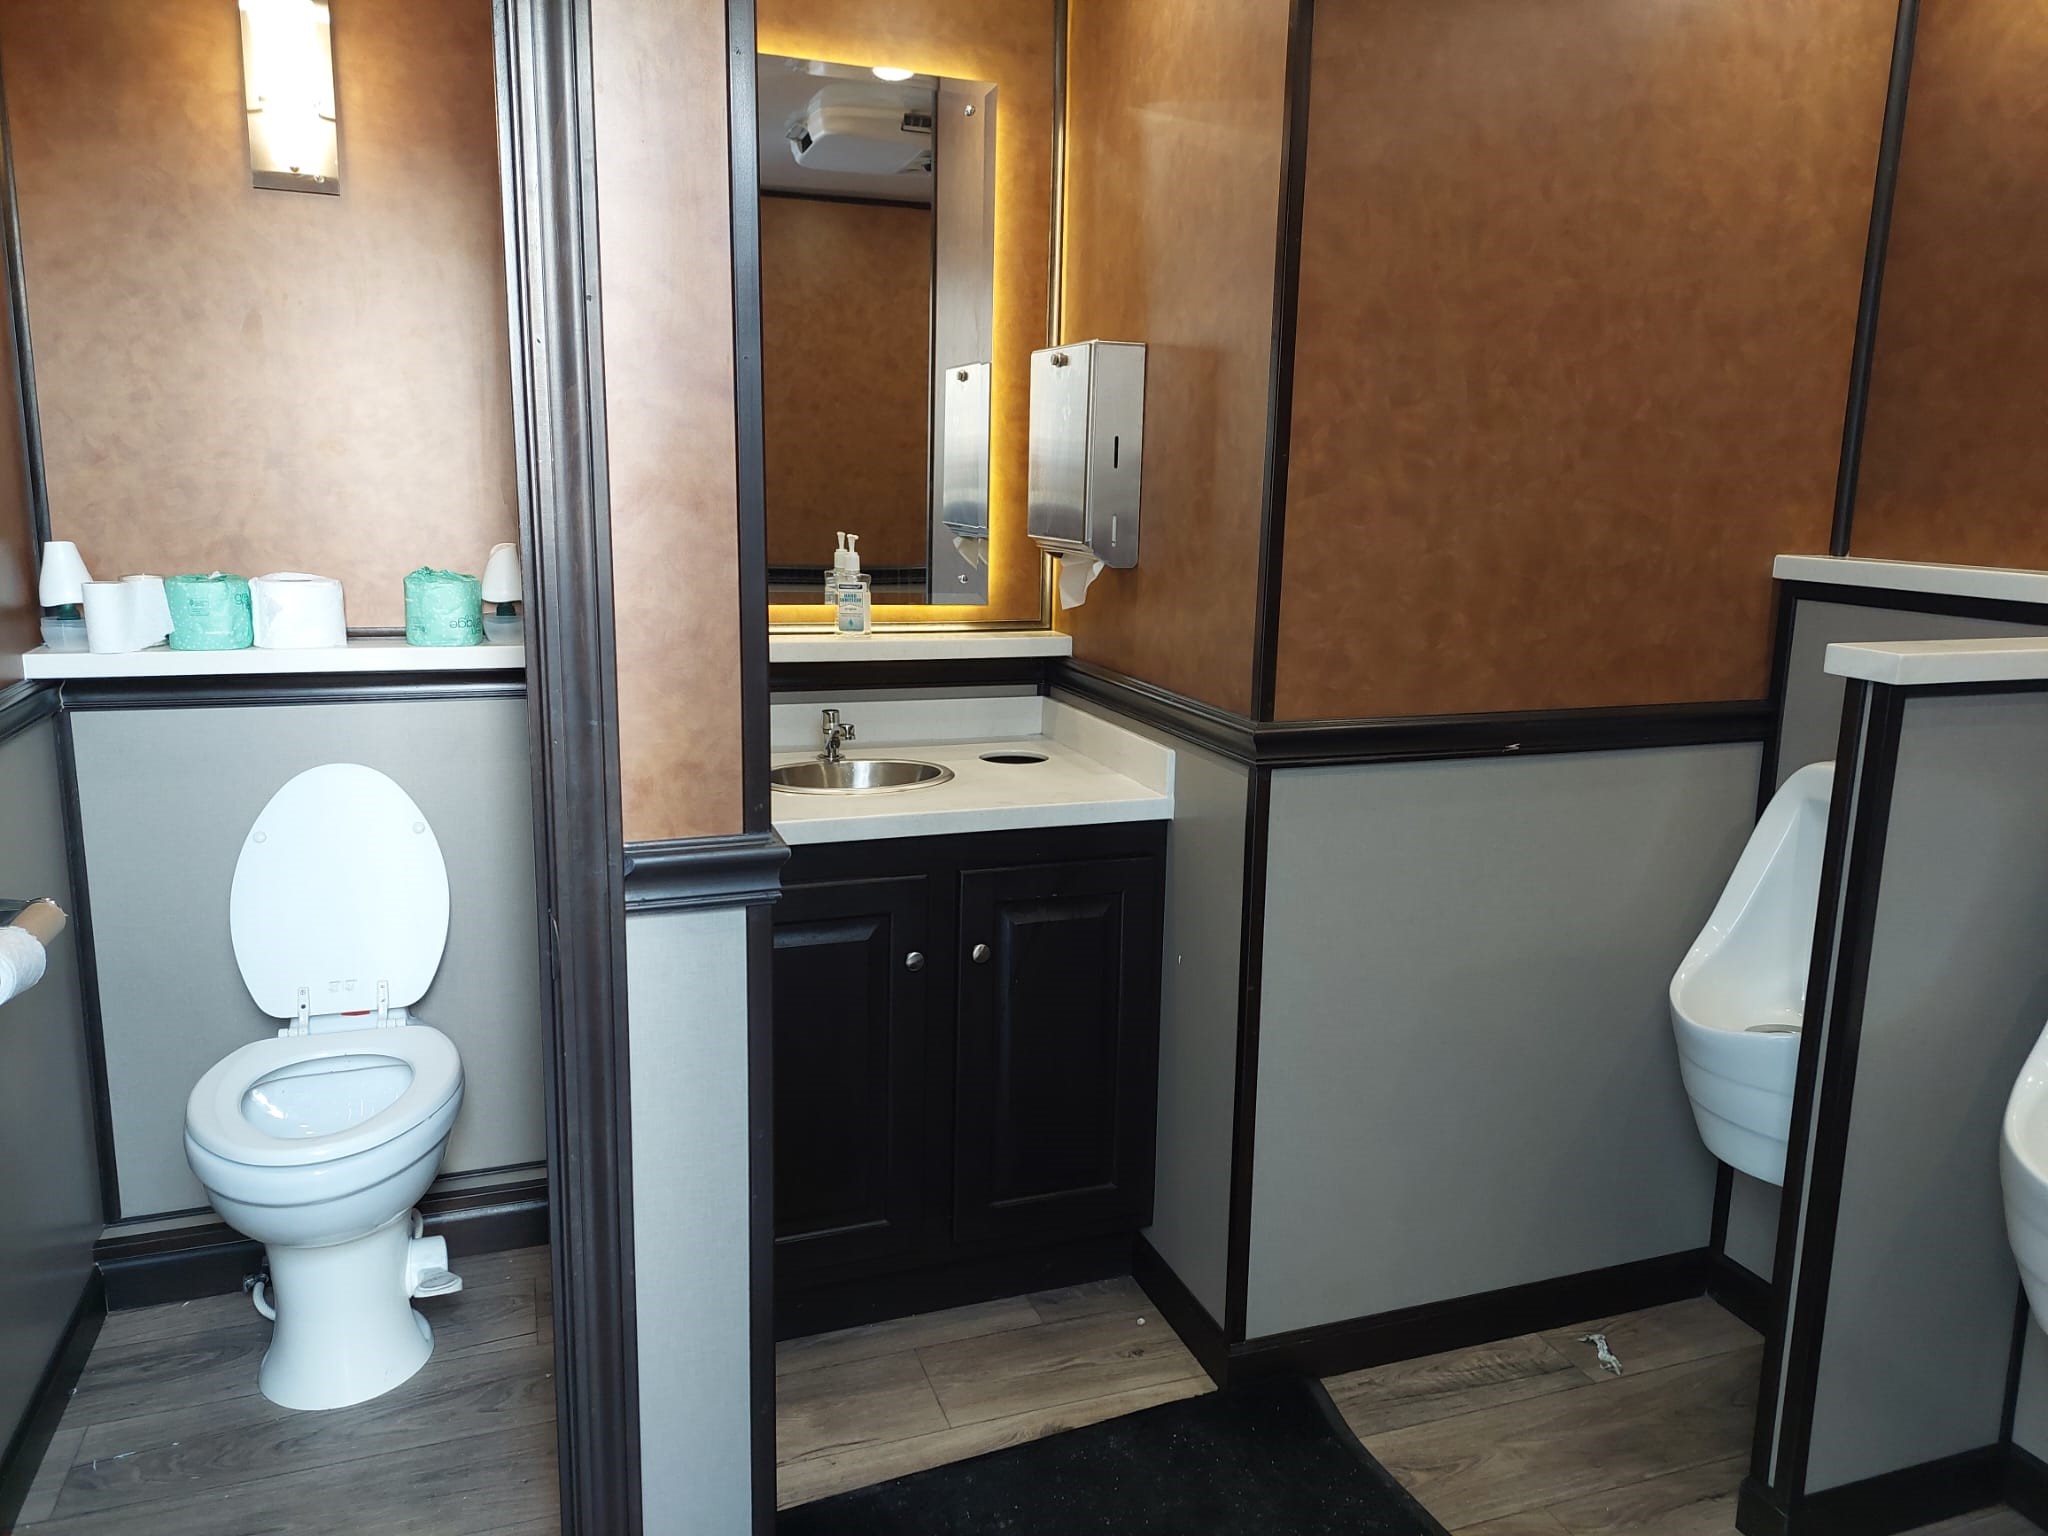 interior of luxury restroom trailer